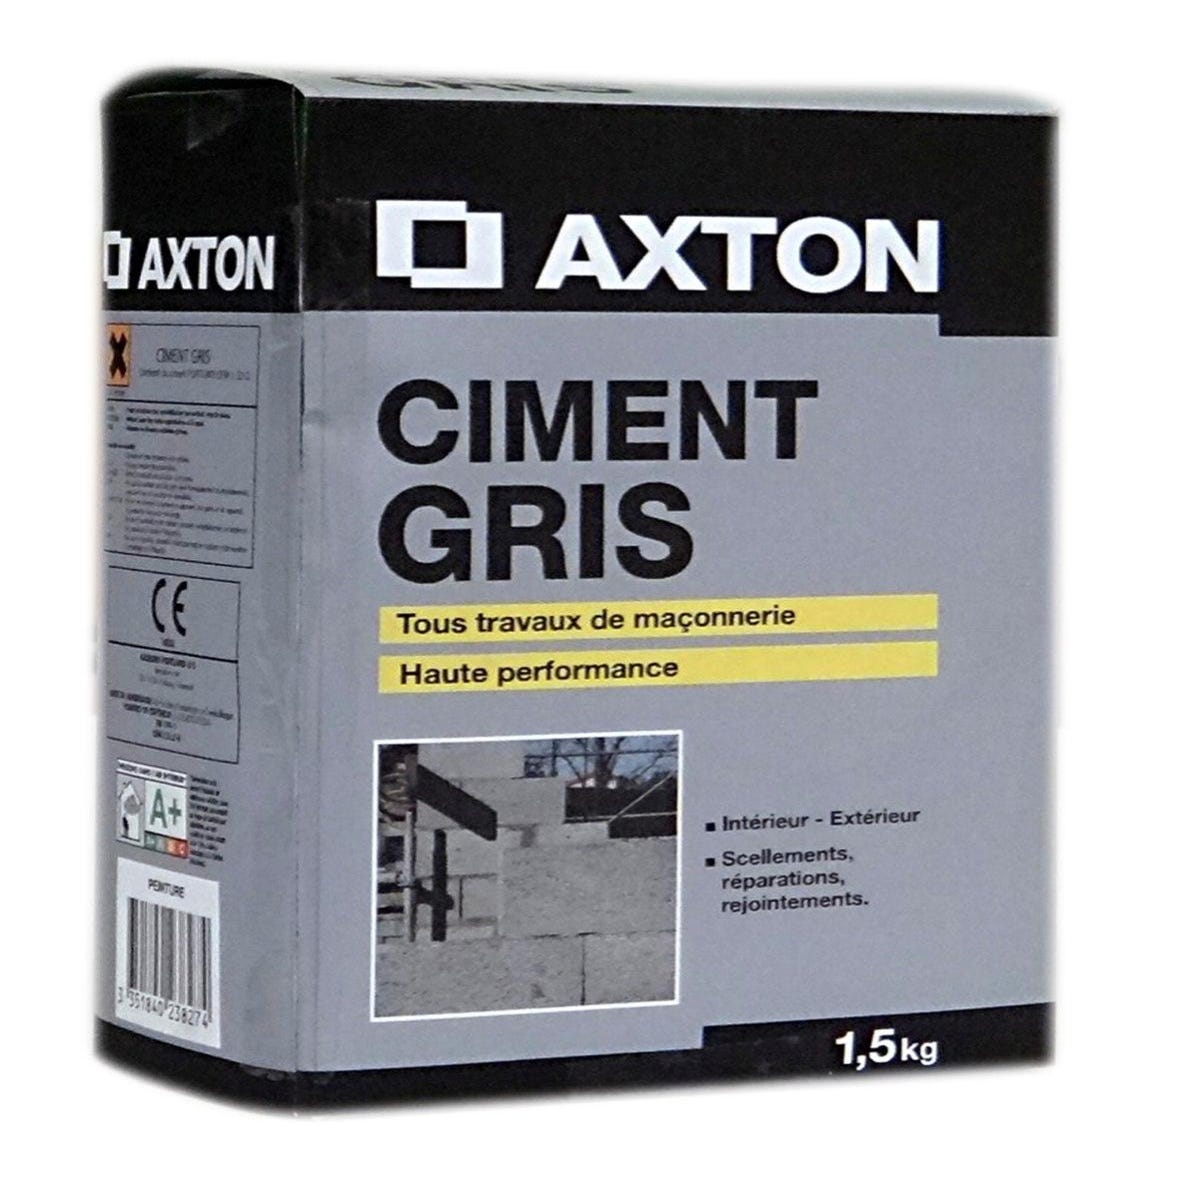 Ciment Blanc Ce Axton, 5 Kg | Sanifer